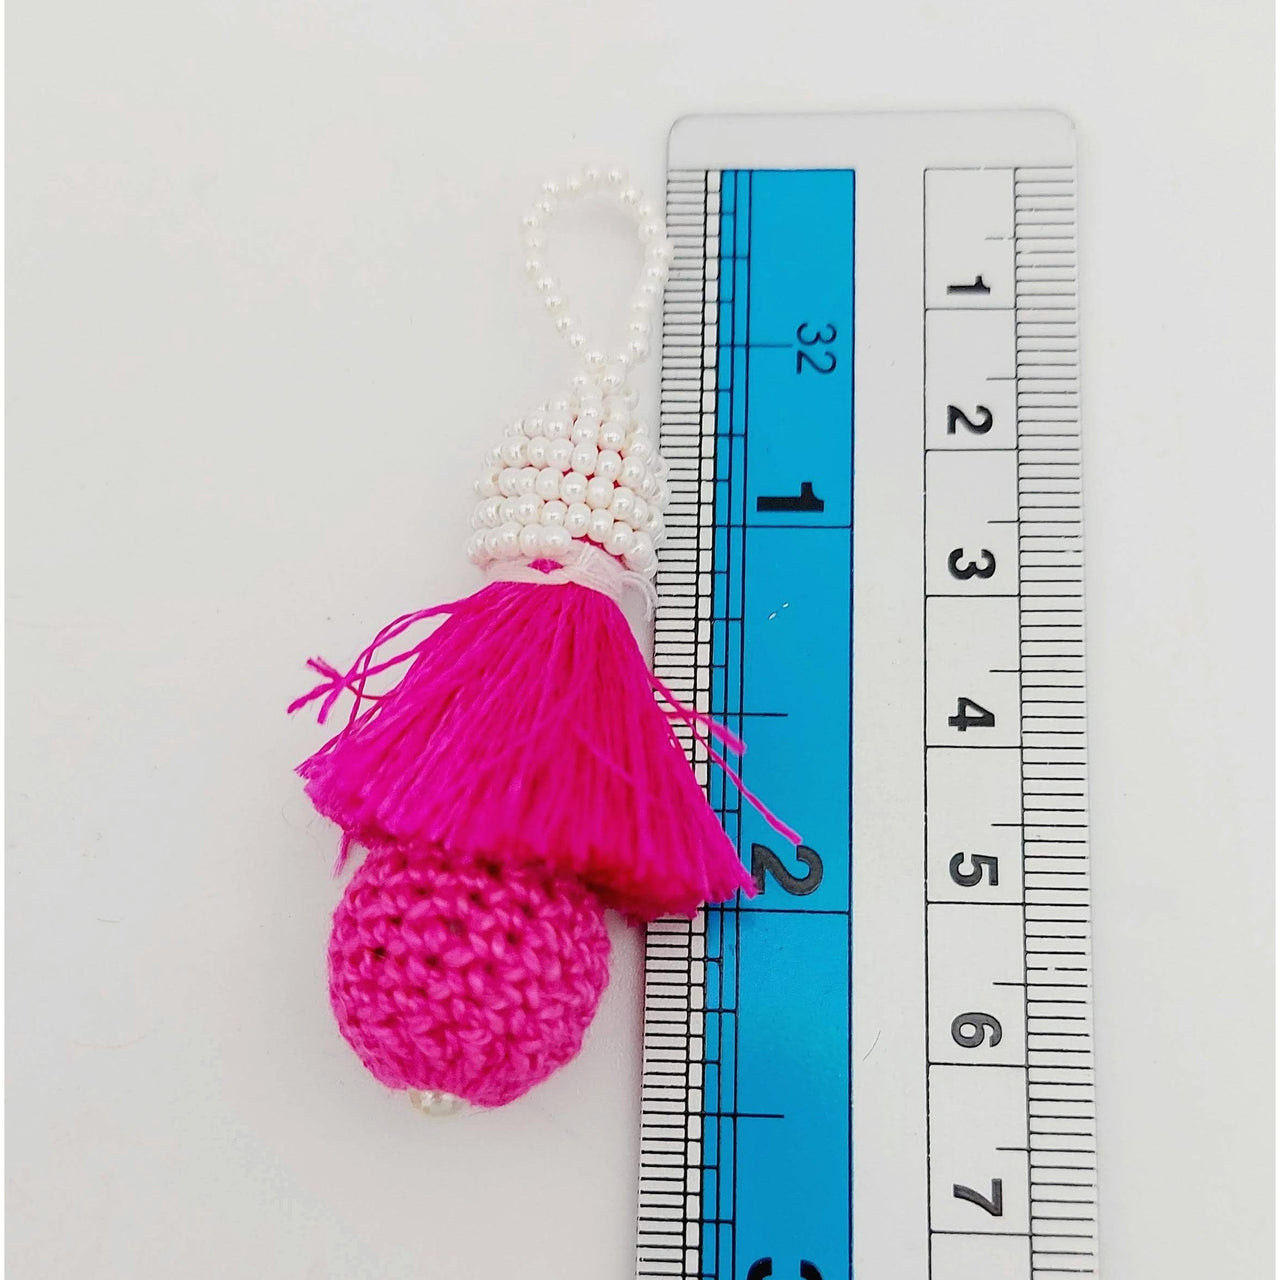 Fuchsia Pink Crochet Ball Tassels With White Pearls Beads, Tassel Charms, Nylon Tassels x 2